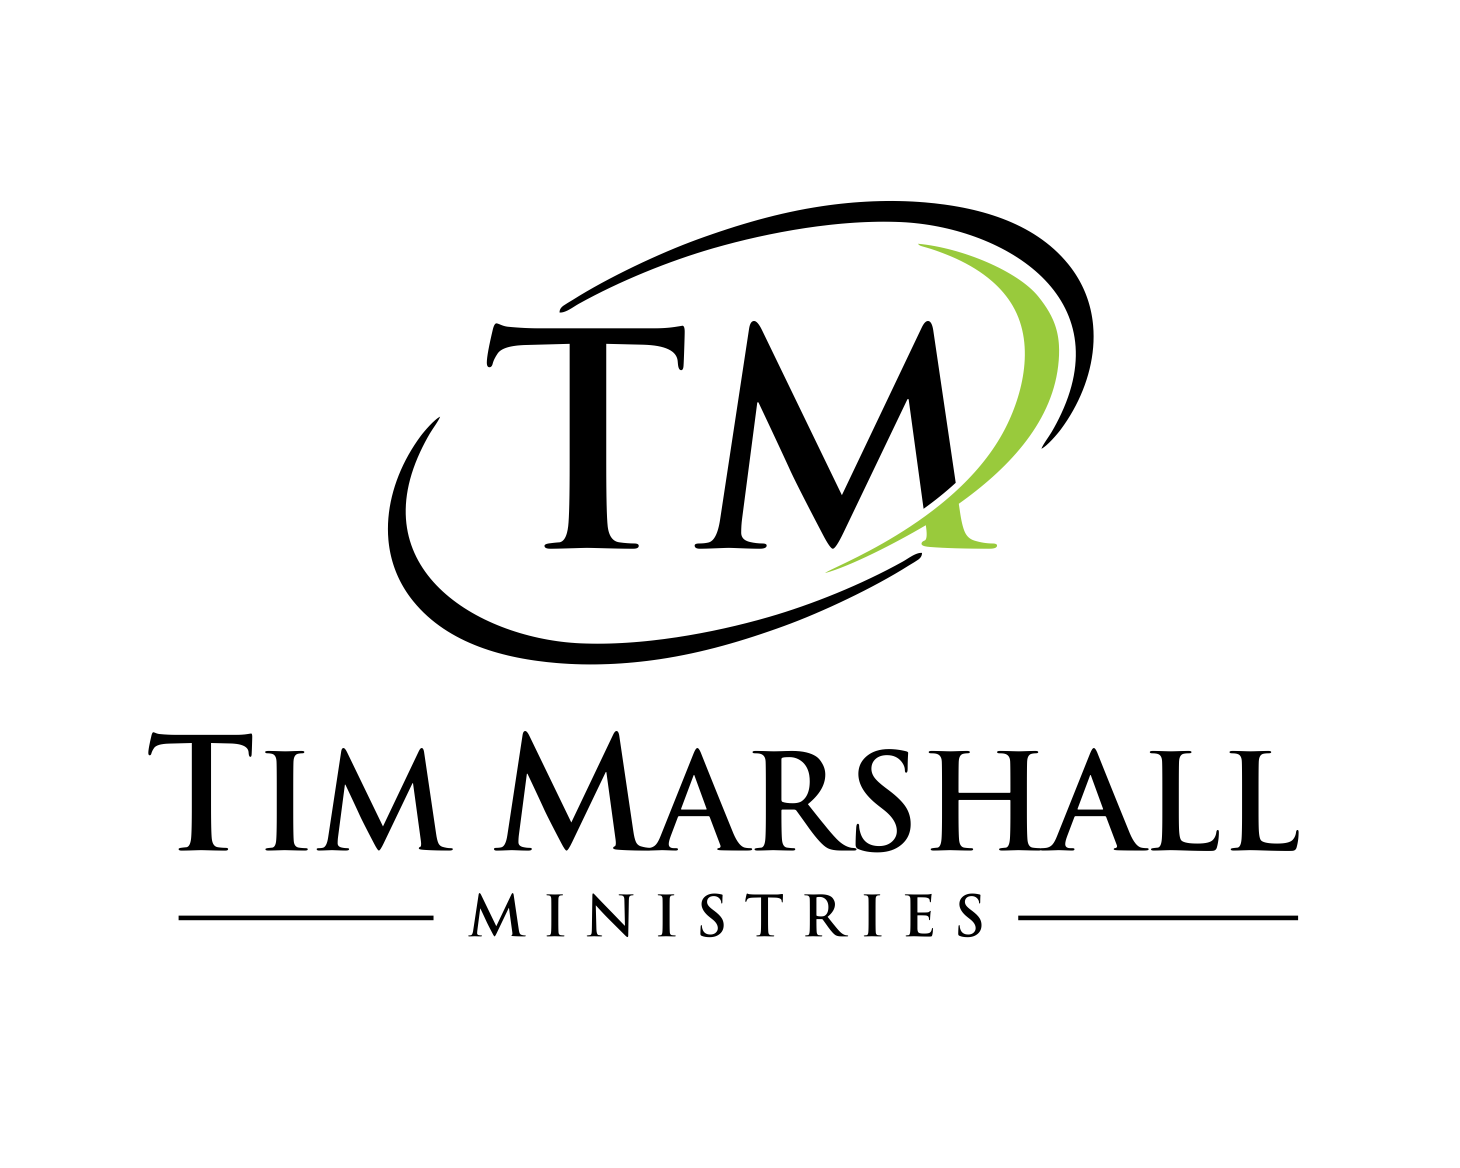 Tim Marshall Ministries